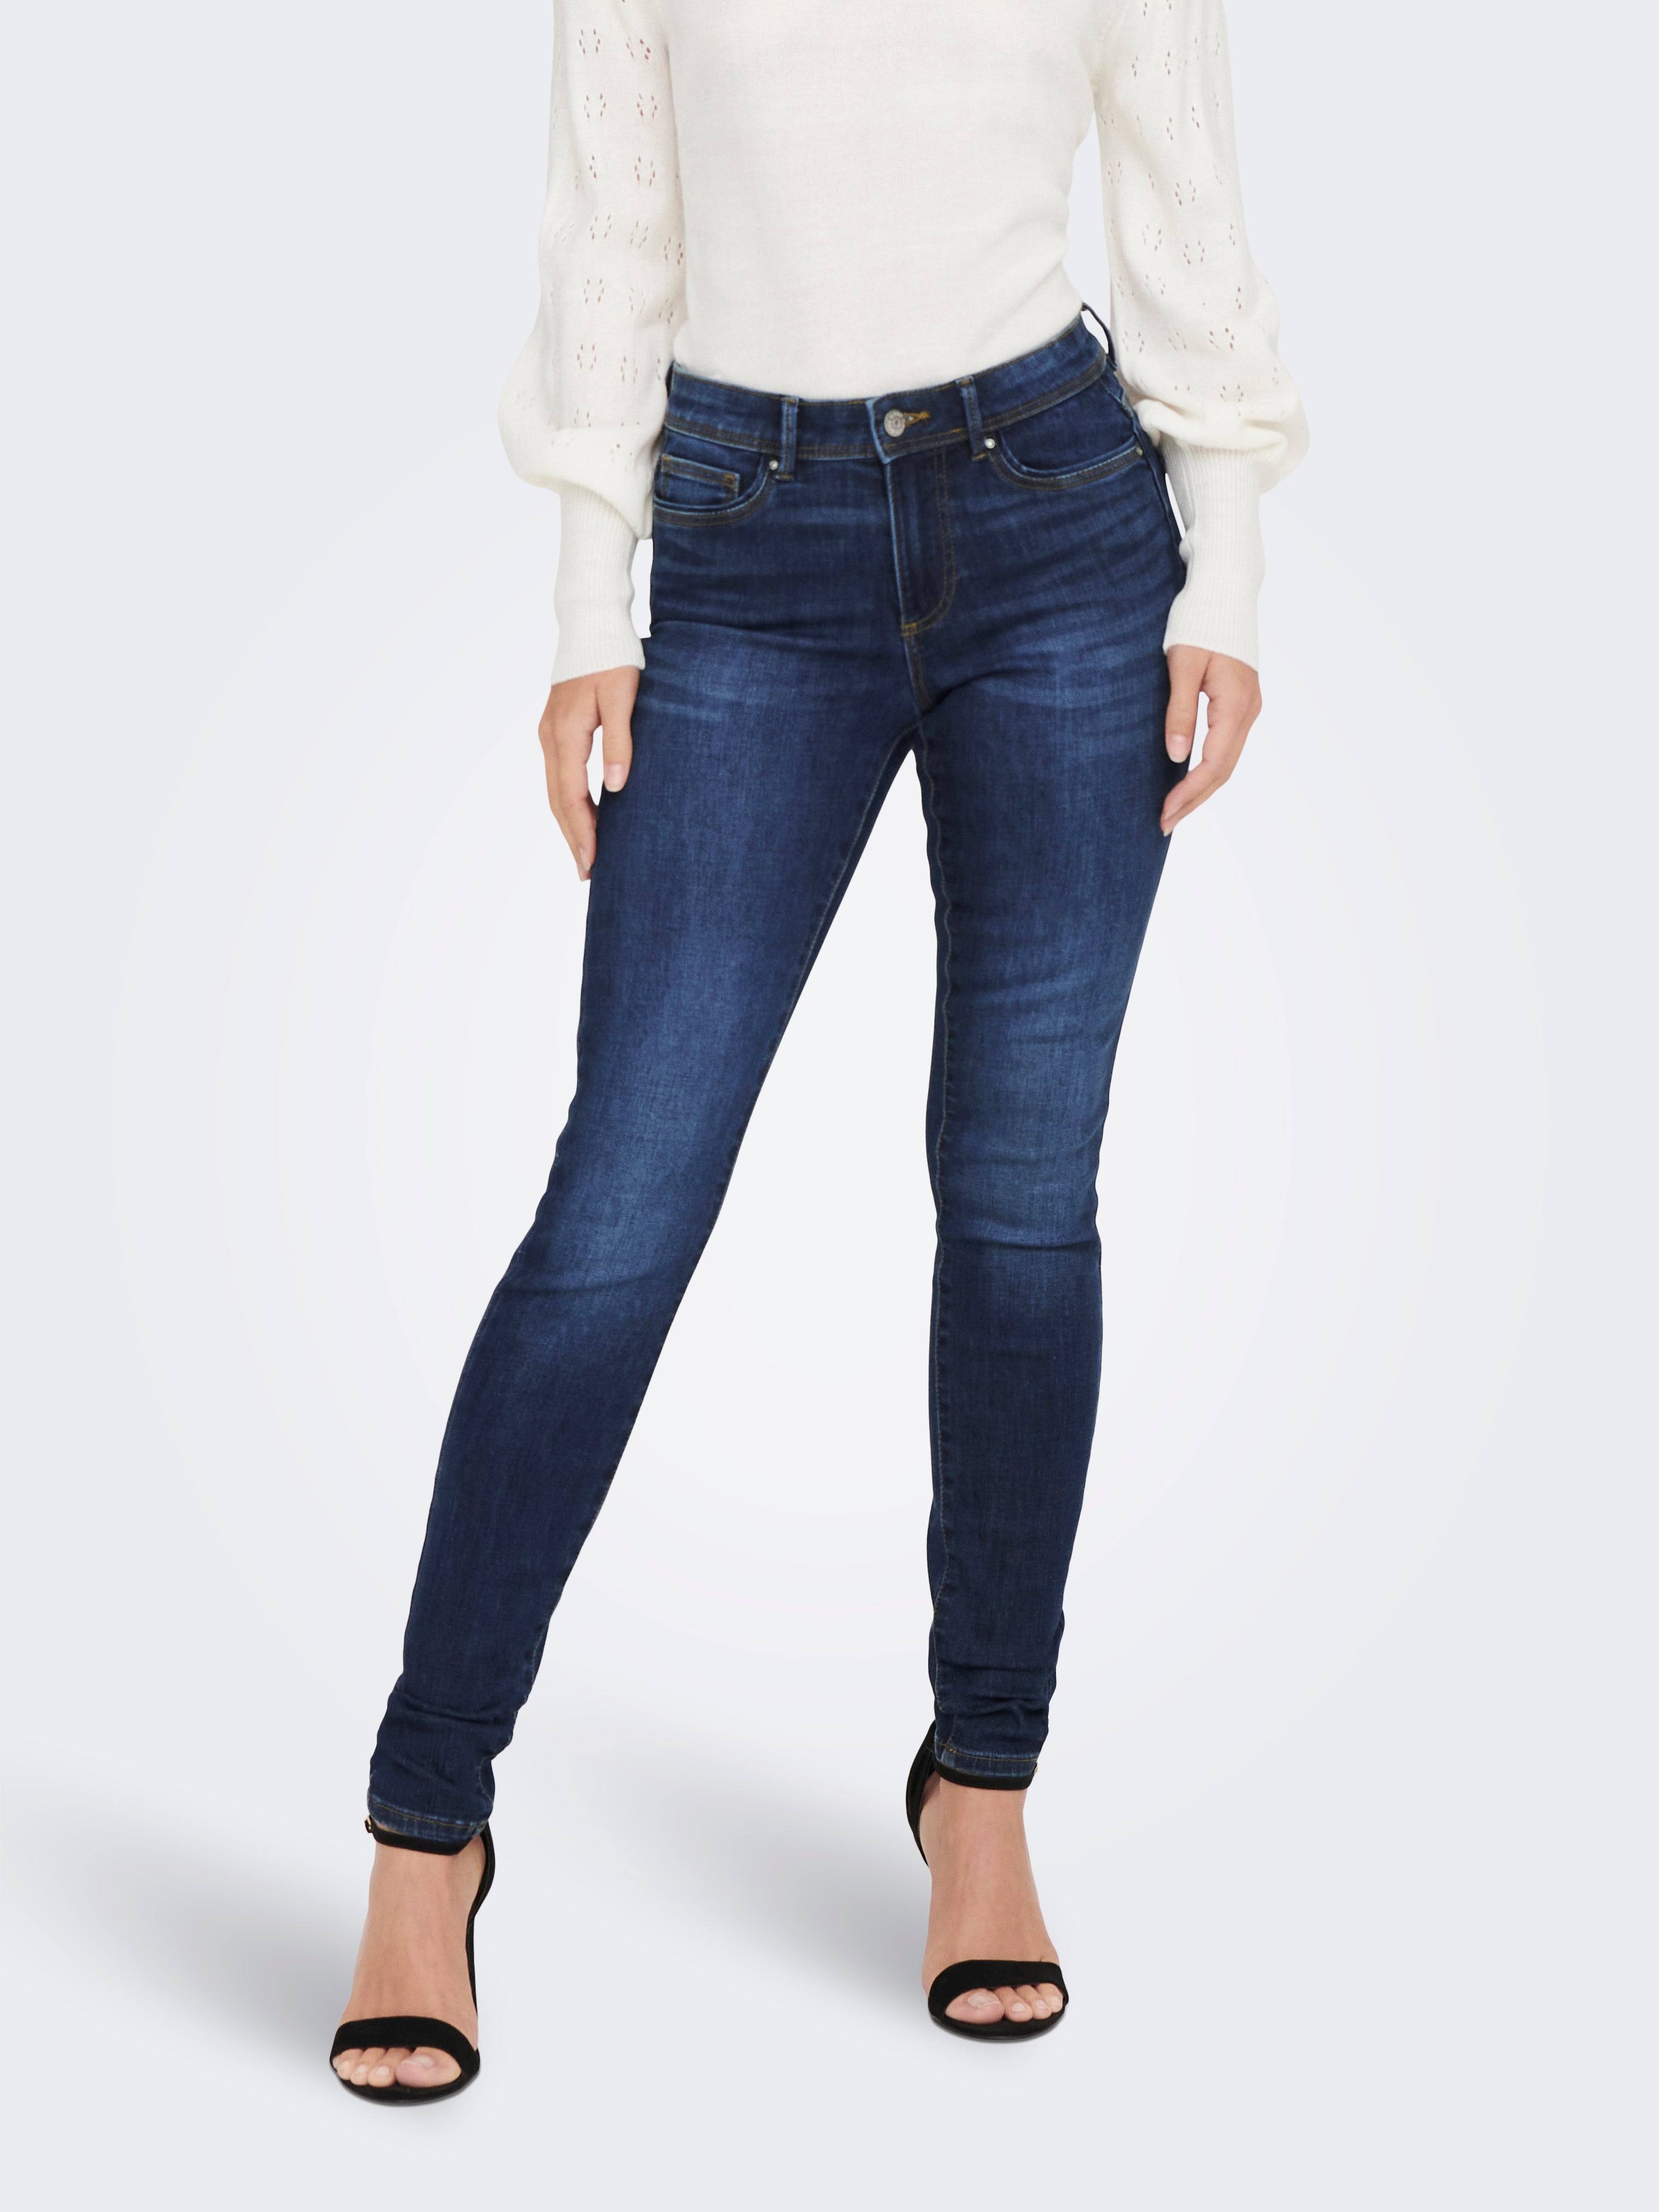 discount 68% WOMEN FASHION Jeans Straight jeans Basic Shaqiru straight jeans Navy Blue 42                  EU 